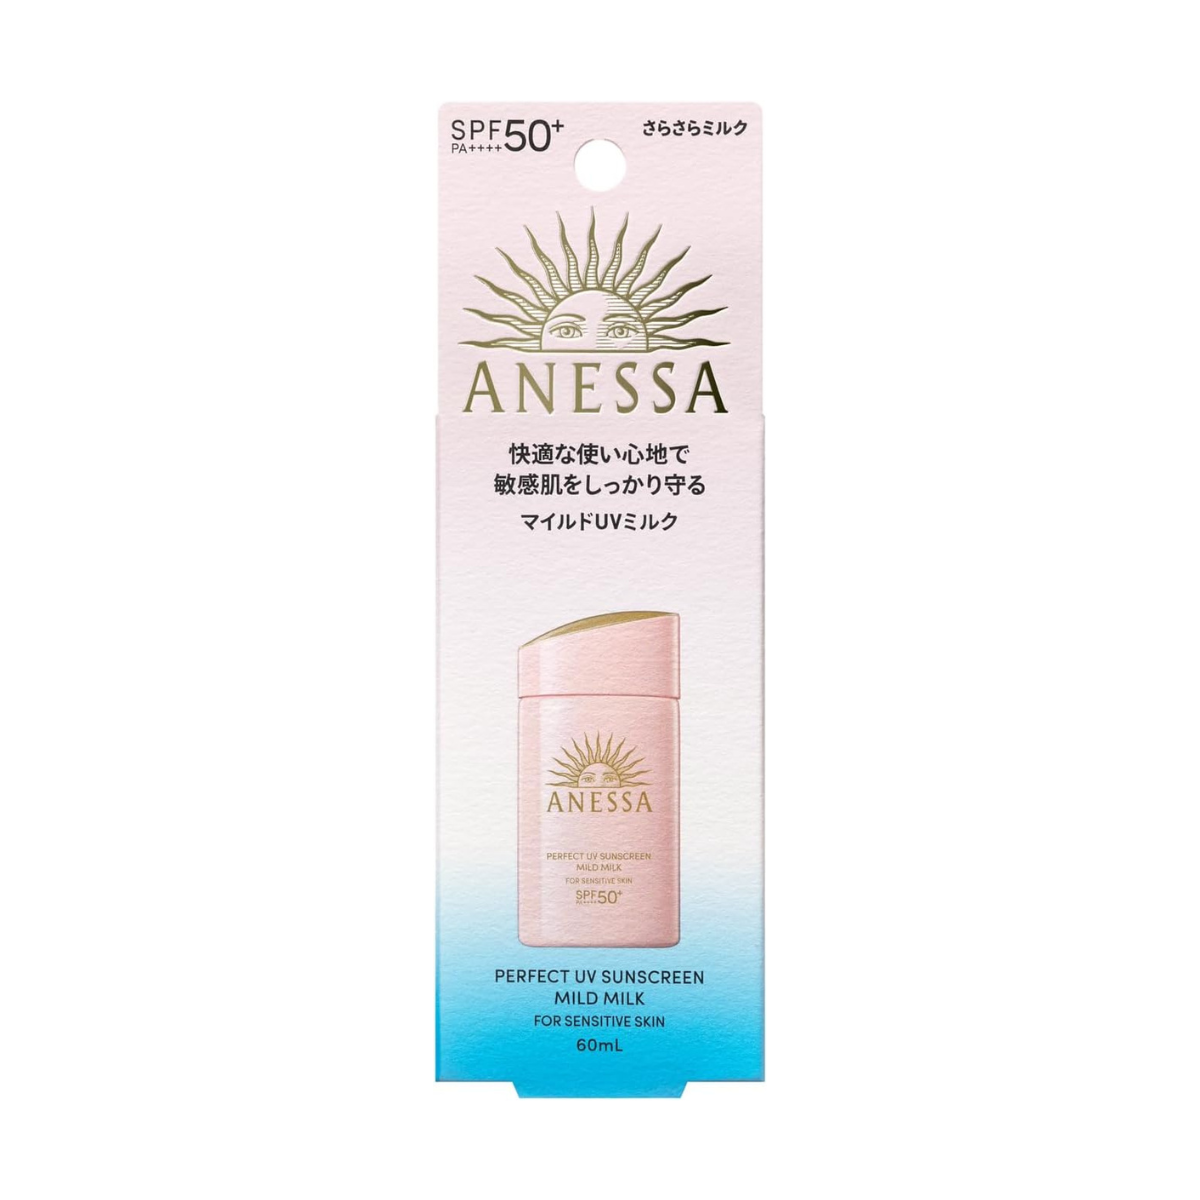 ANESSA Perfect UV Sunscreen Mild Milk SPF50+ PA++++